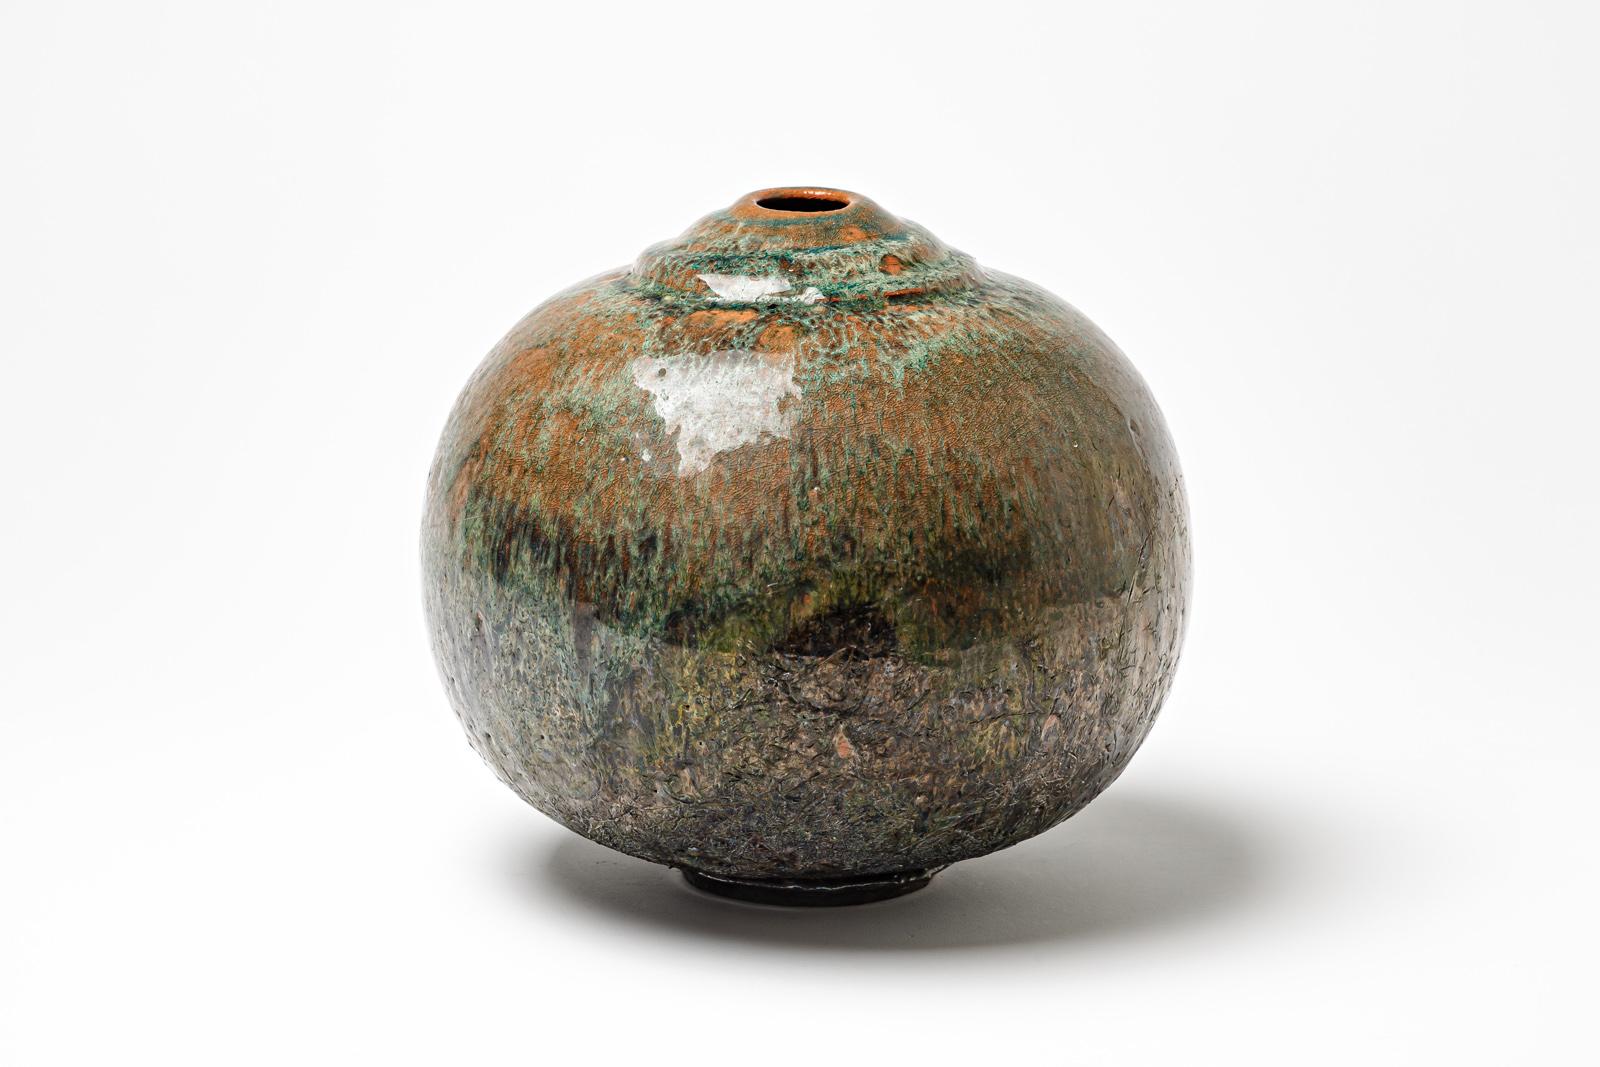 Brown/red and green glazed ceramic vase by Gisèle Buthod Garçon. 
Raku fired. Artist monogram under the base. Circa 1980-1990.
H : 8.7’ x 7.8’ inches.